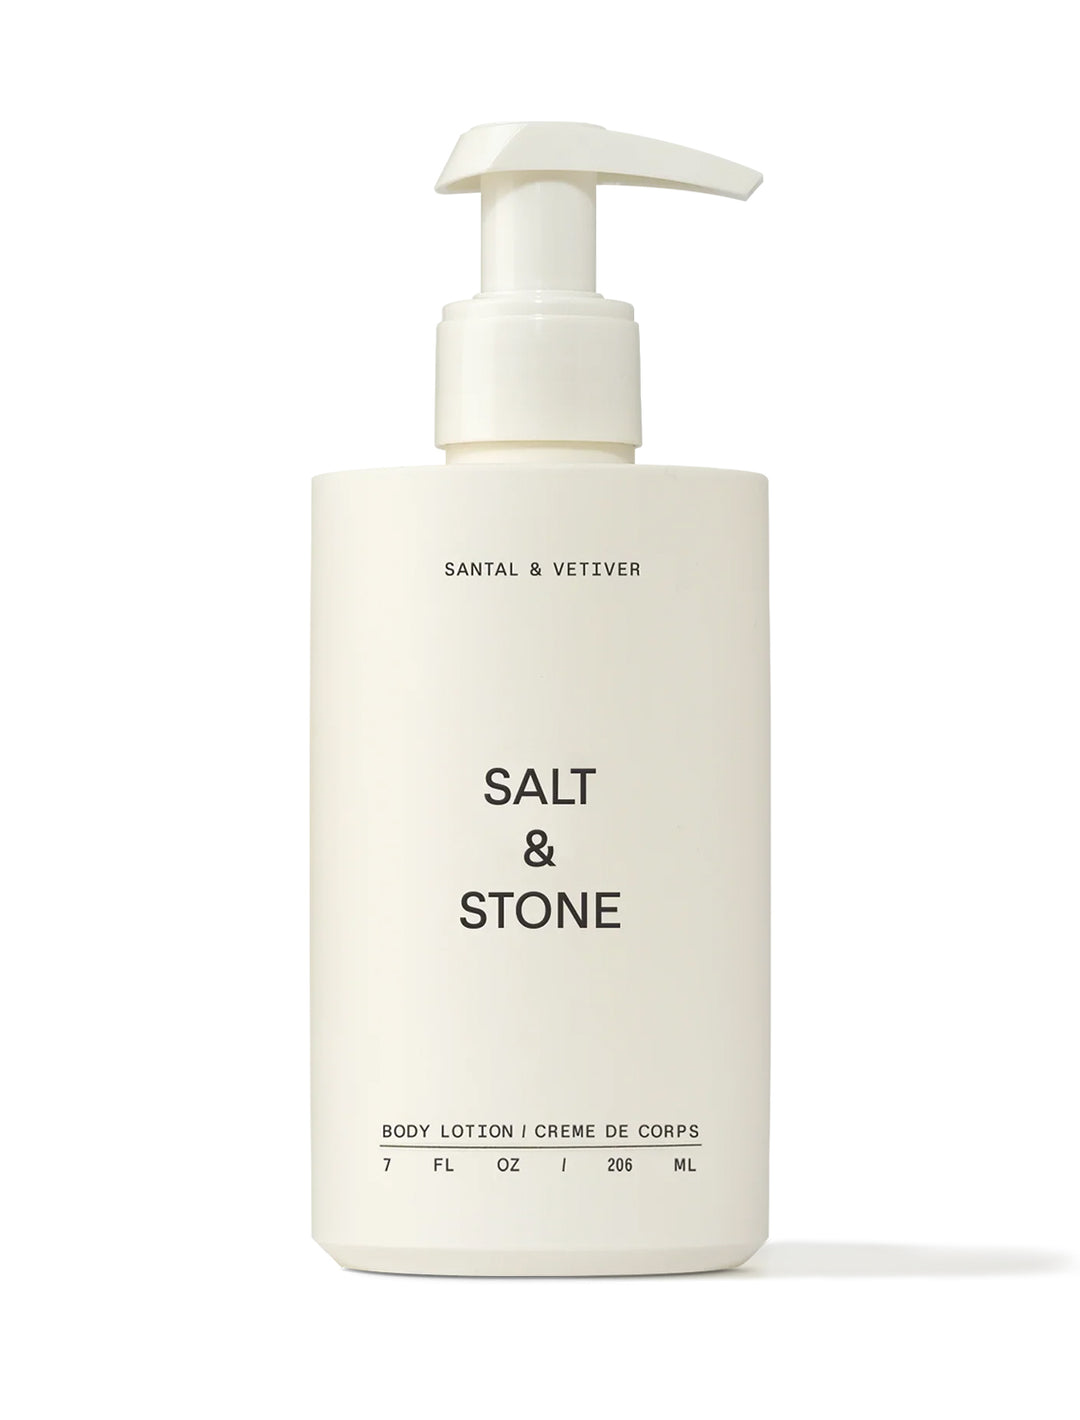 Salt + Stone body lotion in santal and vetiver